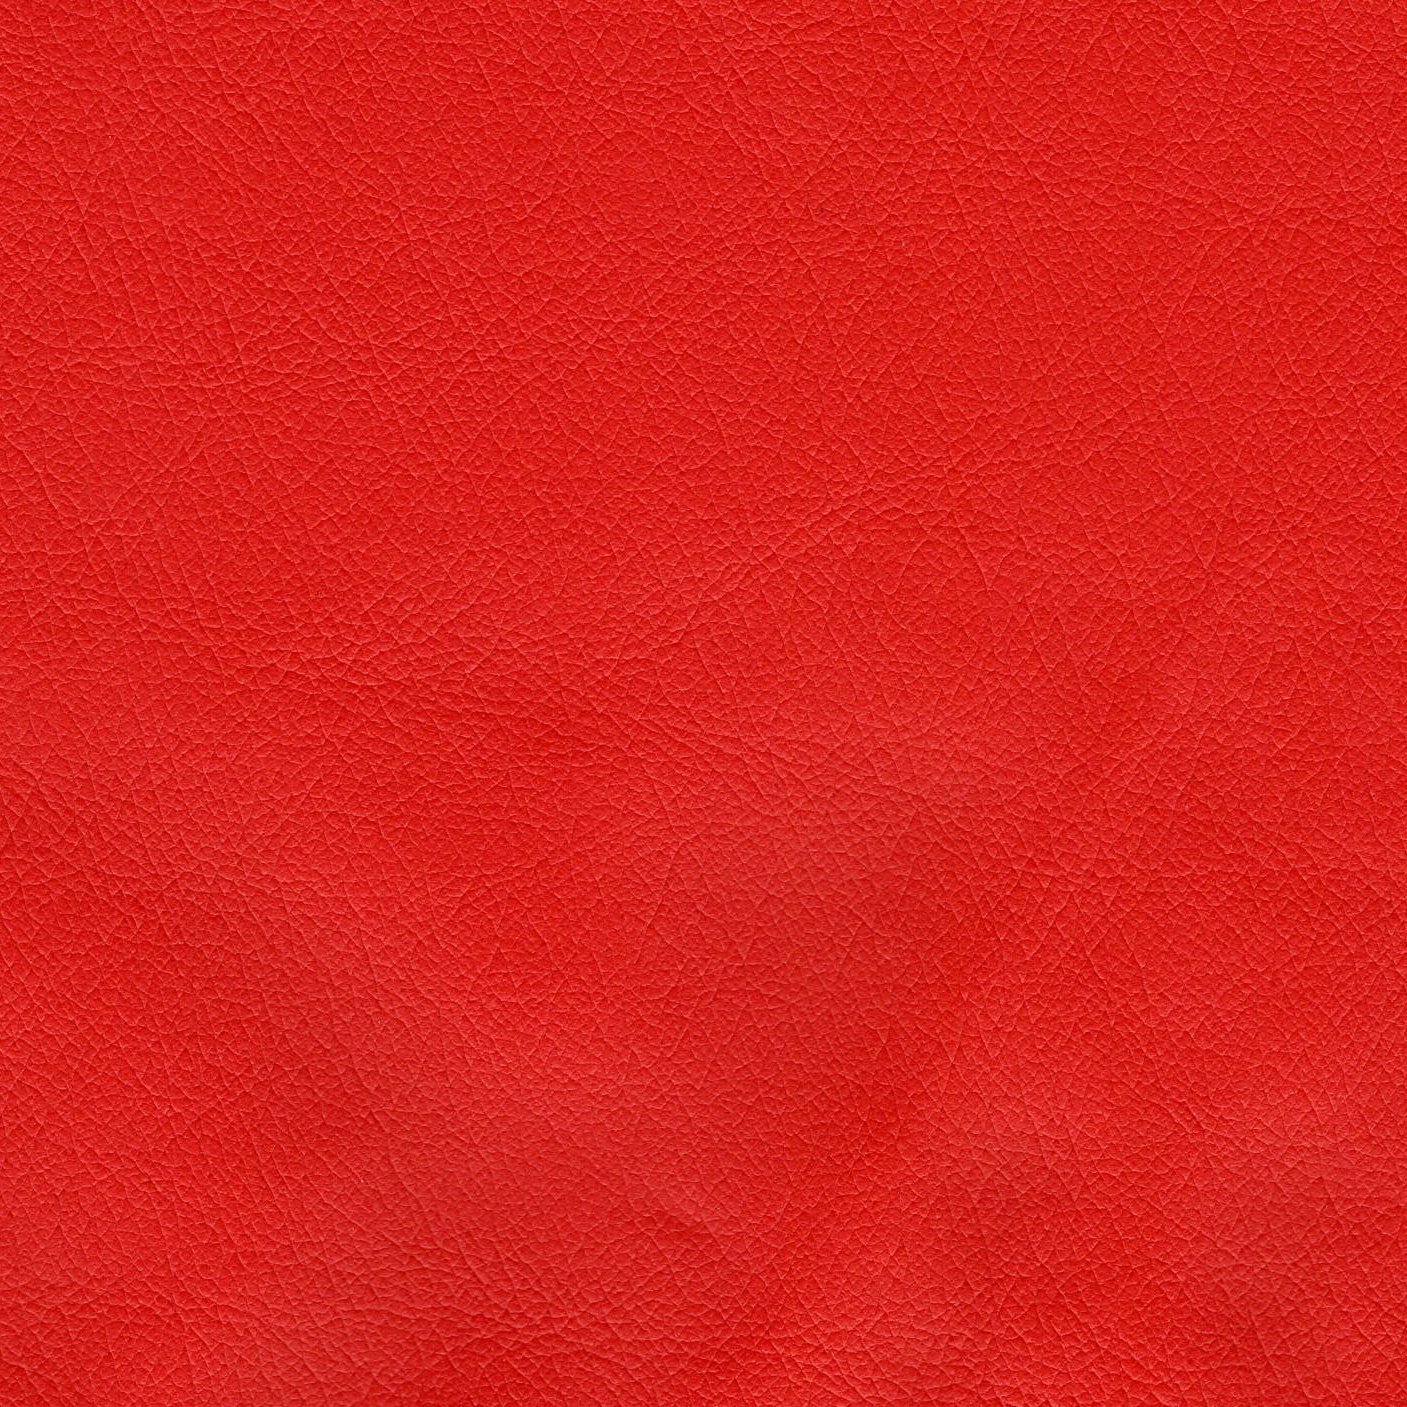 ULTRACUIR - 1176 RED (Copy)